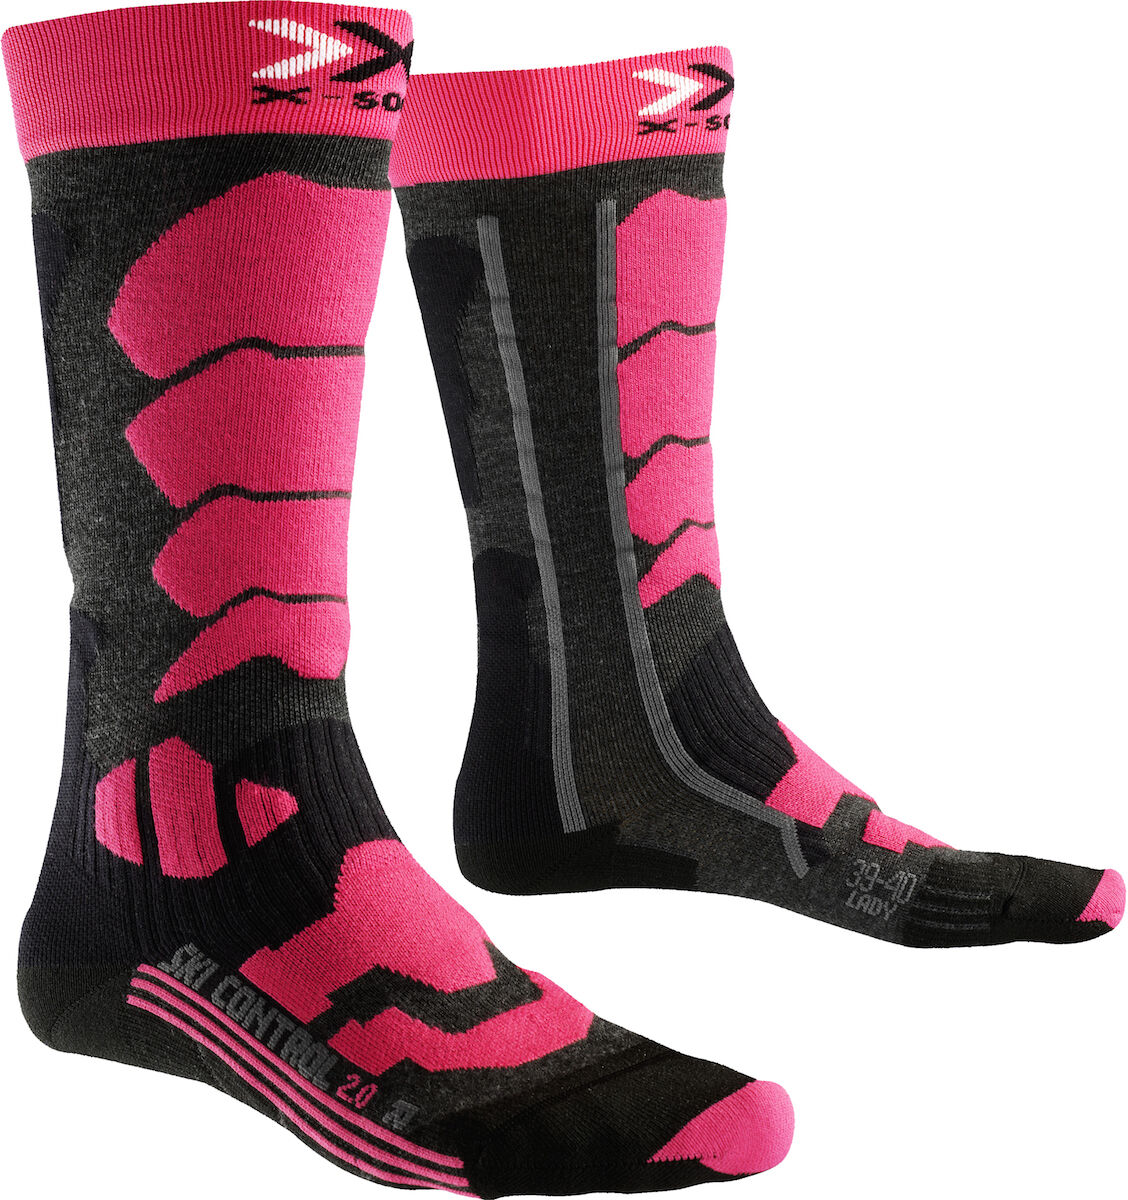 X-Socks - Ski Control Lady 2.0 - Calcetines de esquí - Mujer